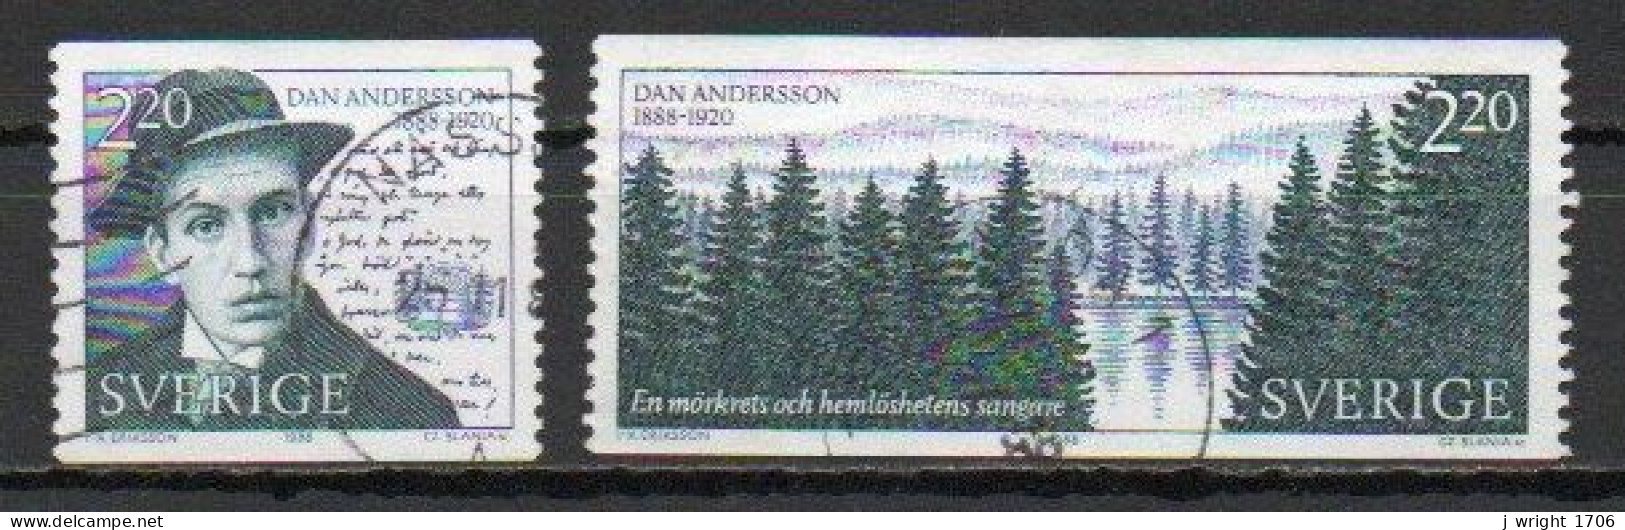 Sweden, 1988, Dan Andersson, Set, USED - Oblitérés